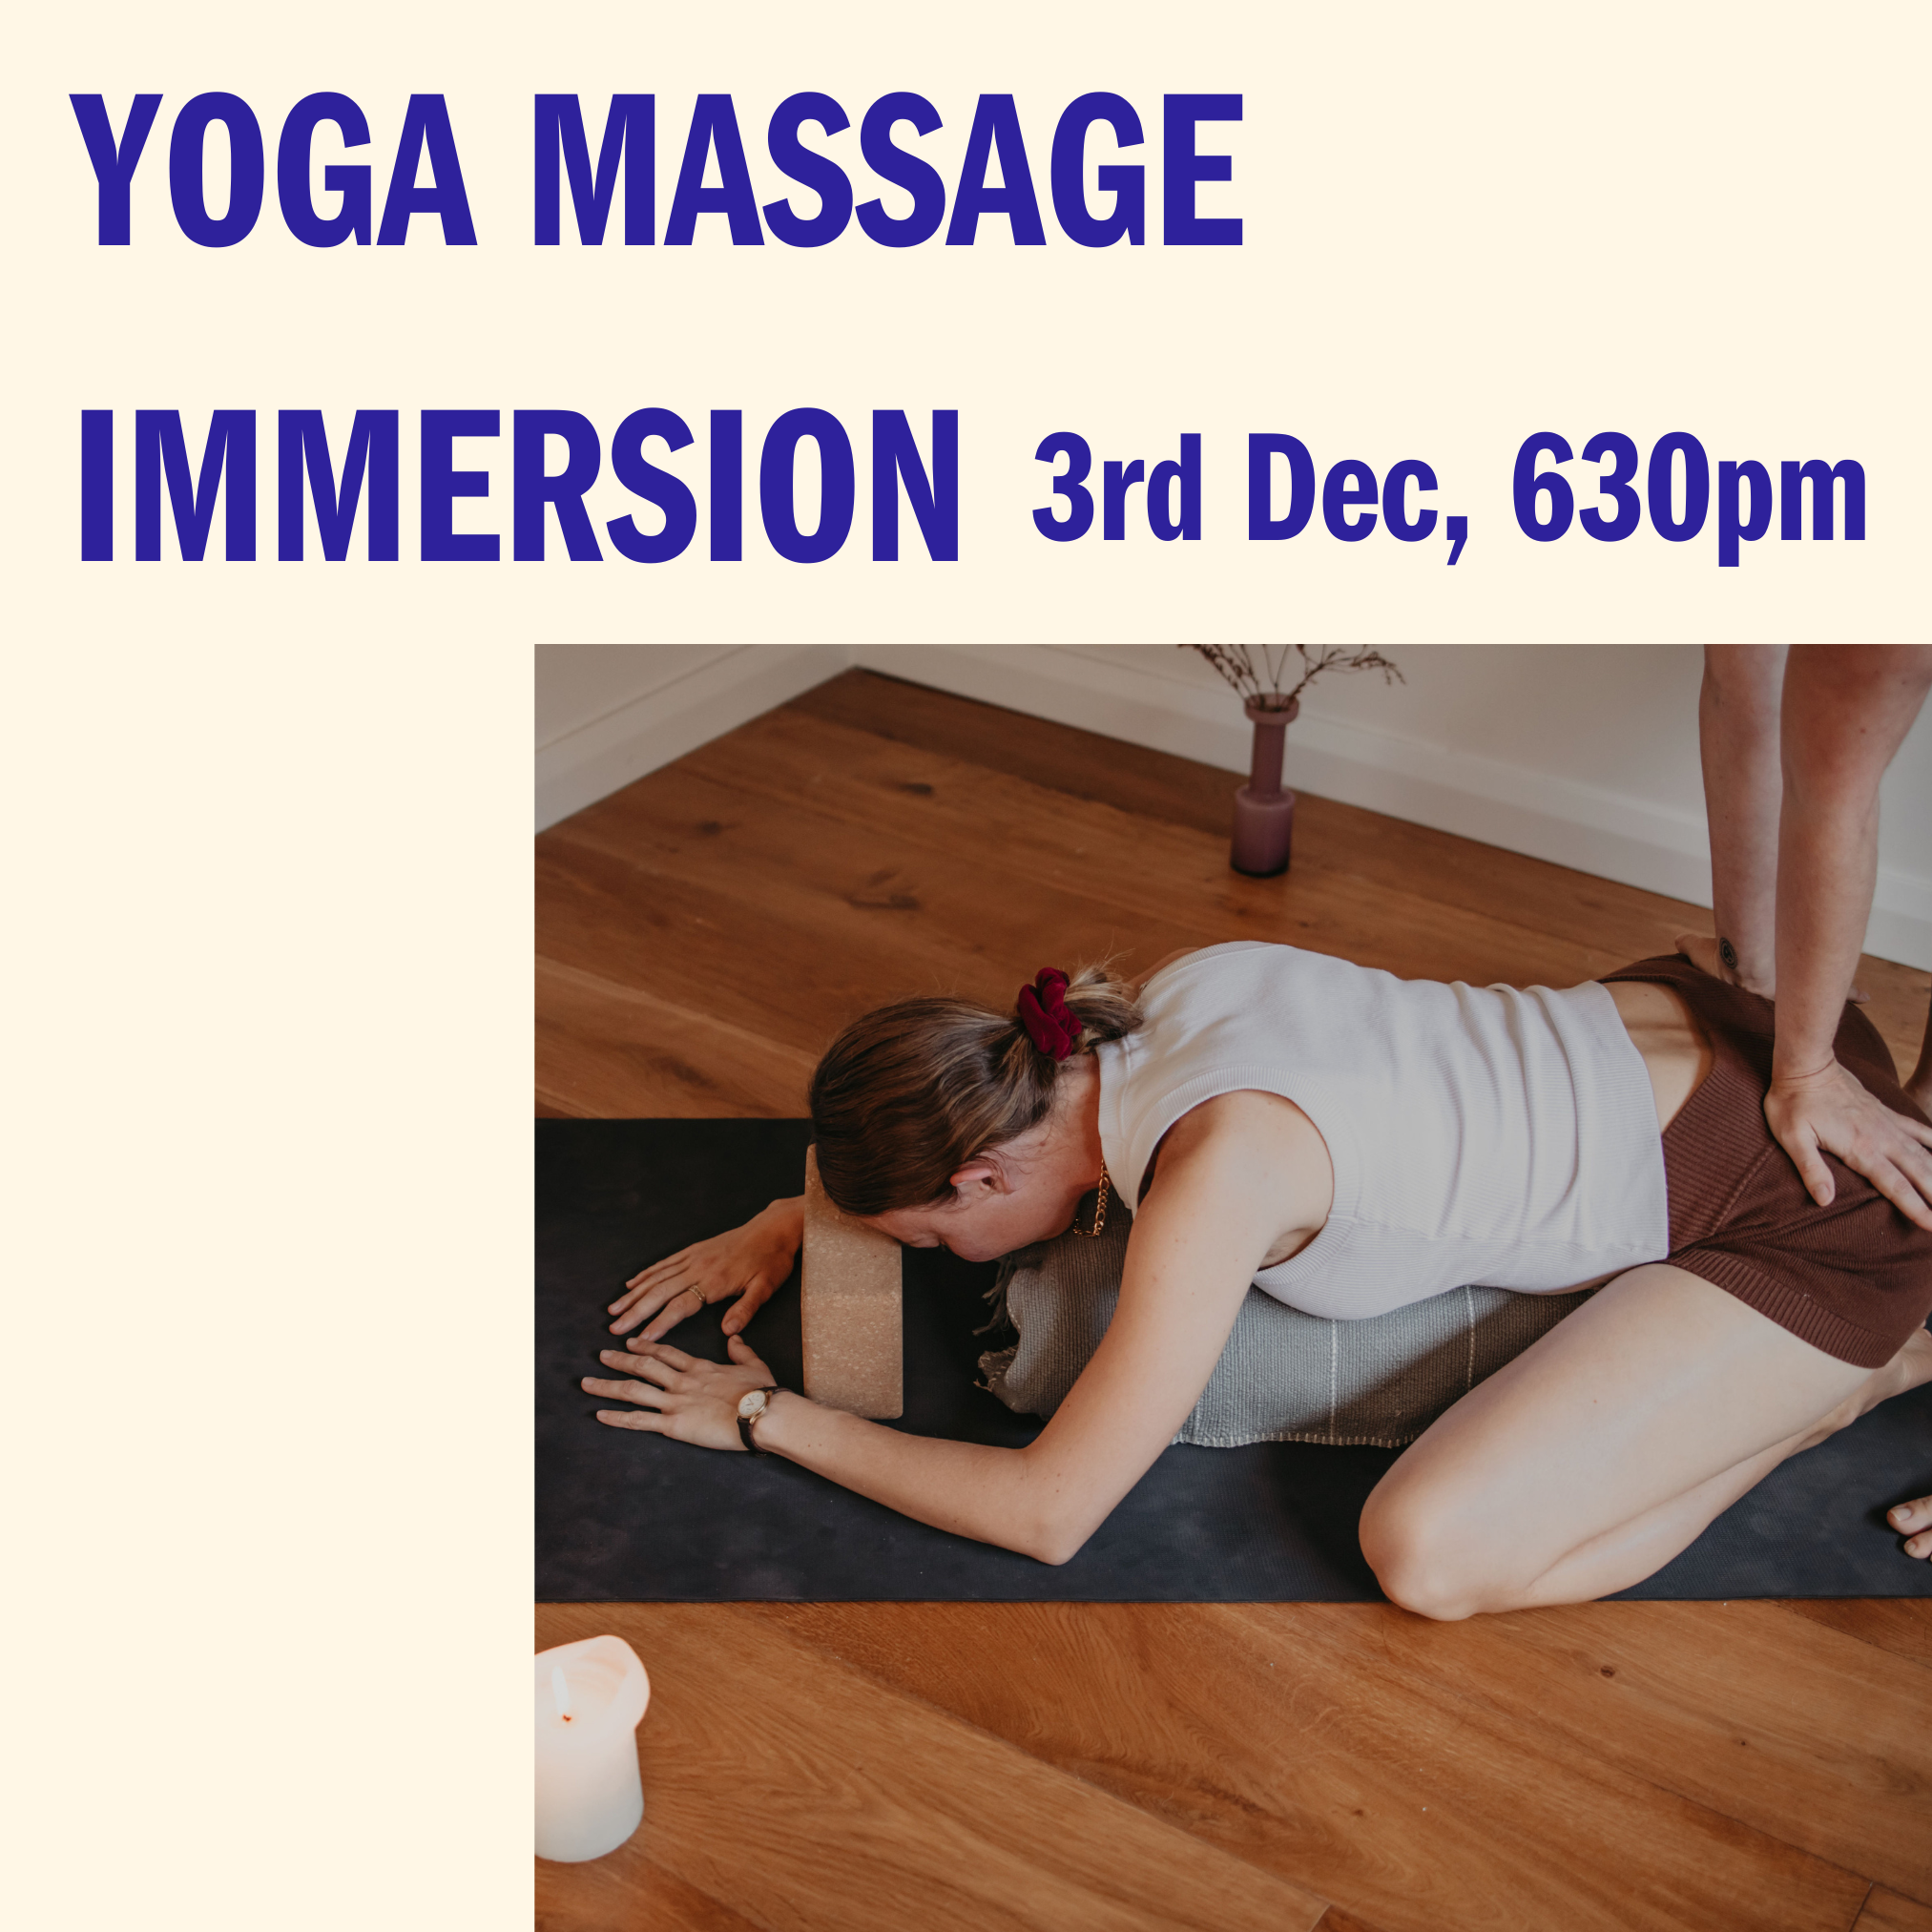 Yoga Massage Immersion: YOMA with Alli & Hannah | 3rd Dec